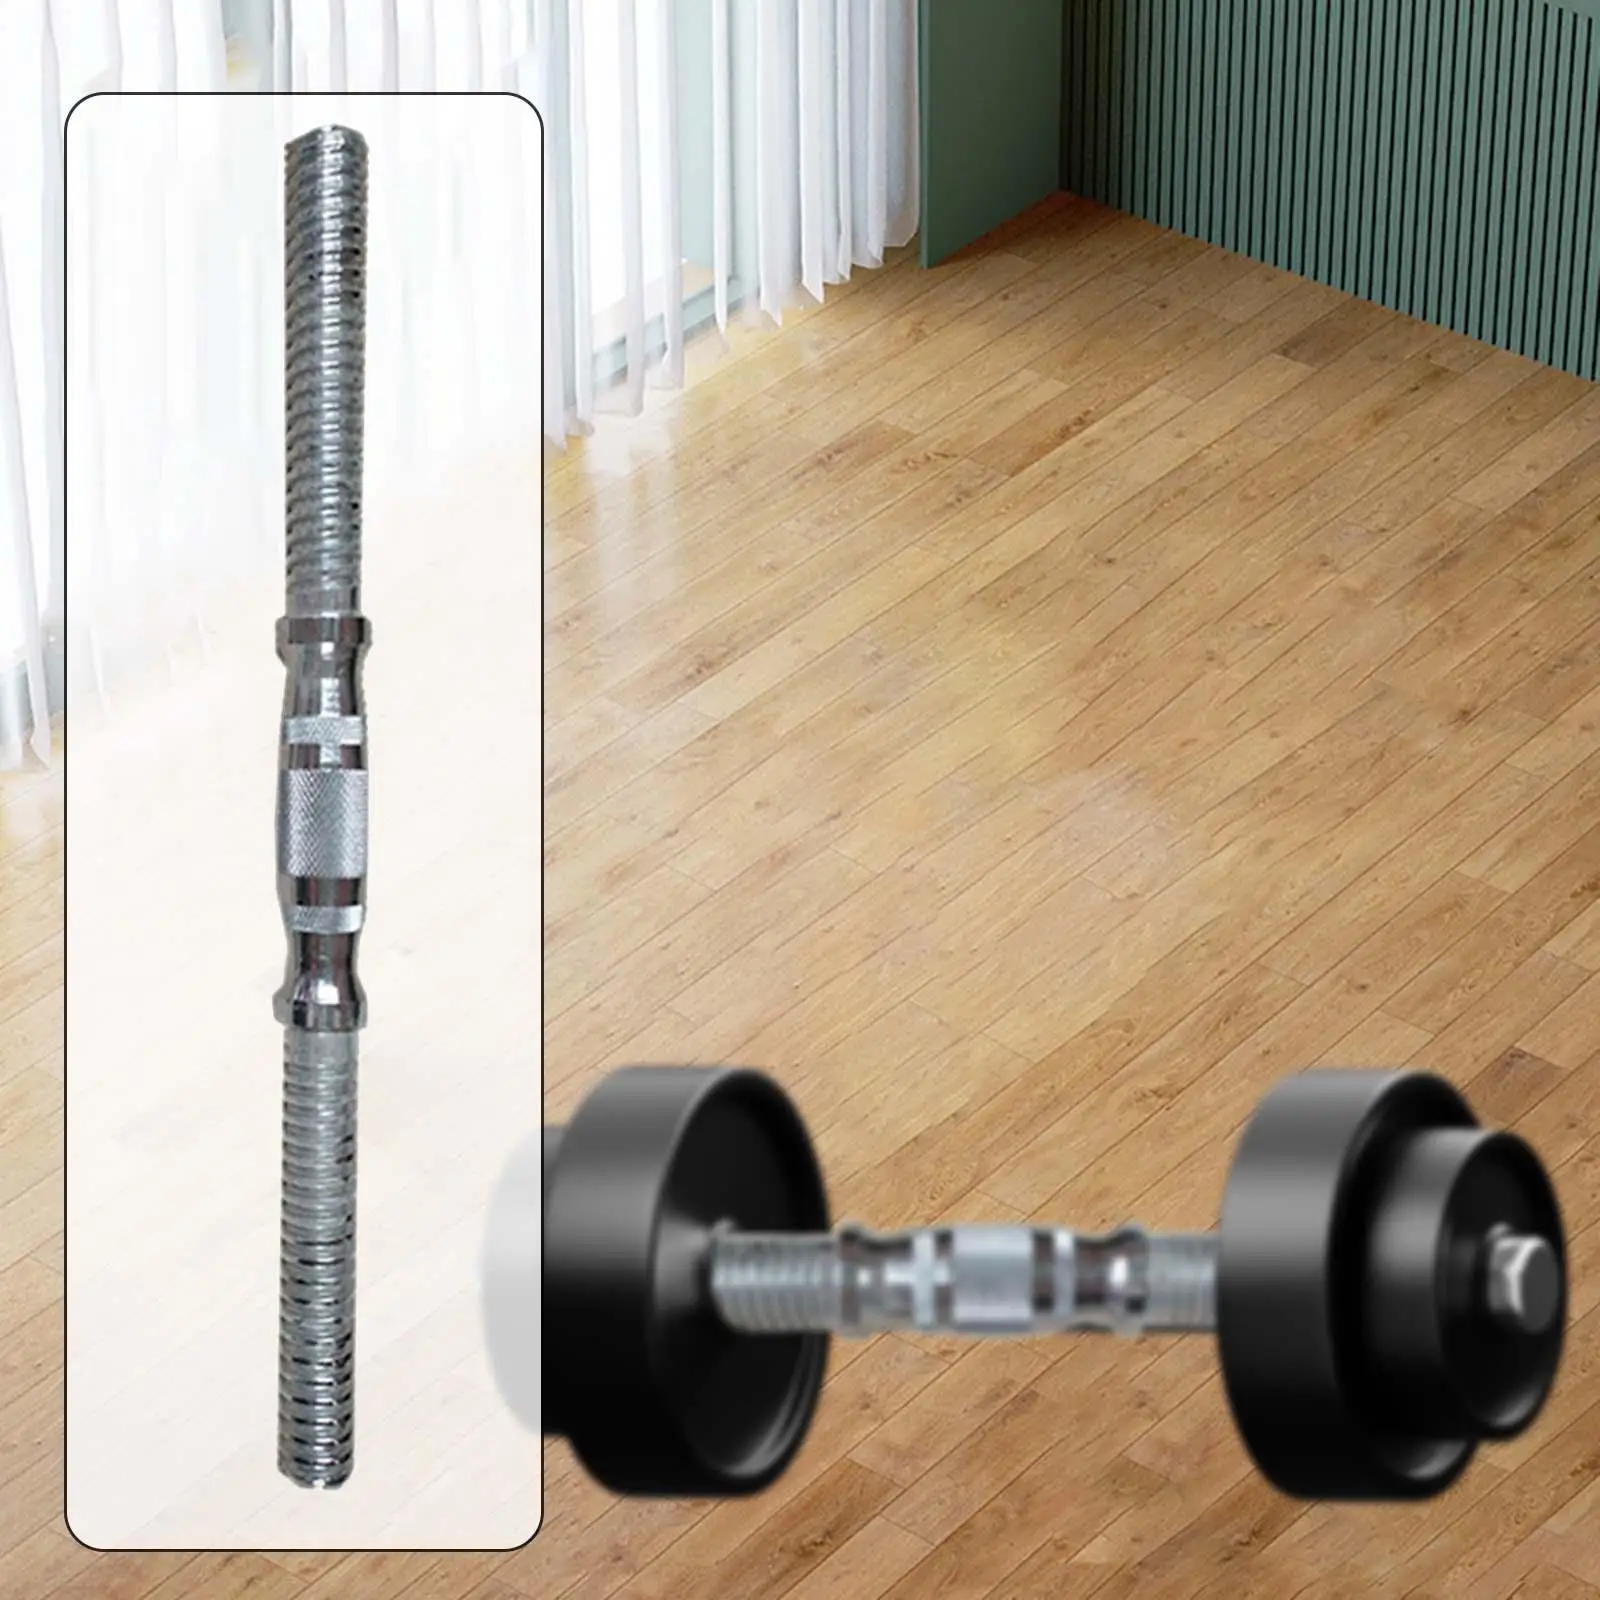 Dumbbell Bar Threaded Durable Single Steel Nonslip Grip Dumbbell Handle for Exercise Home Weightlifting Fitness Equipment